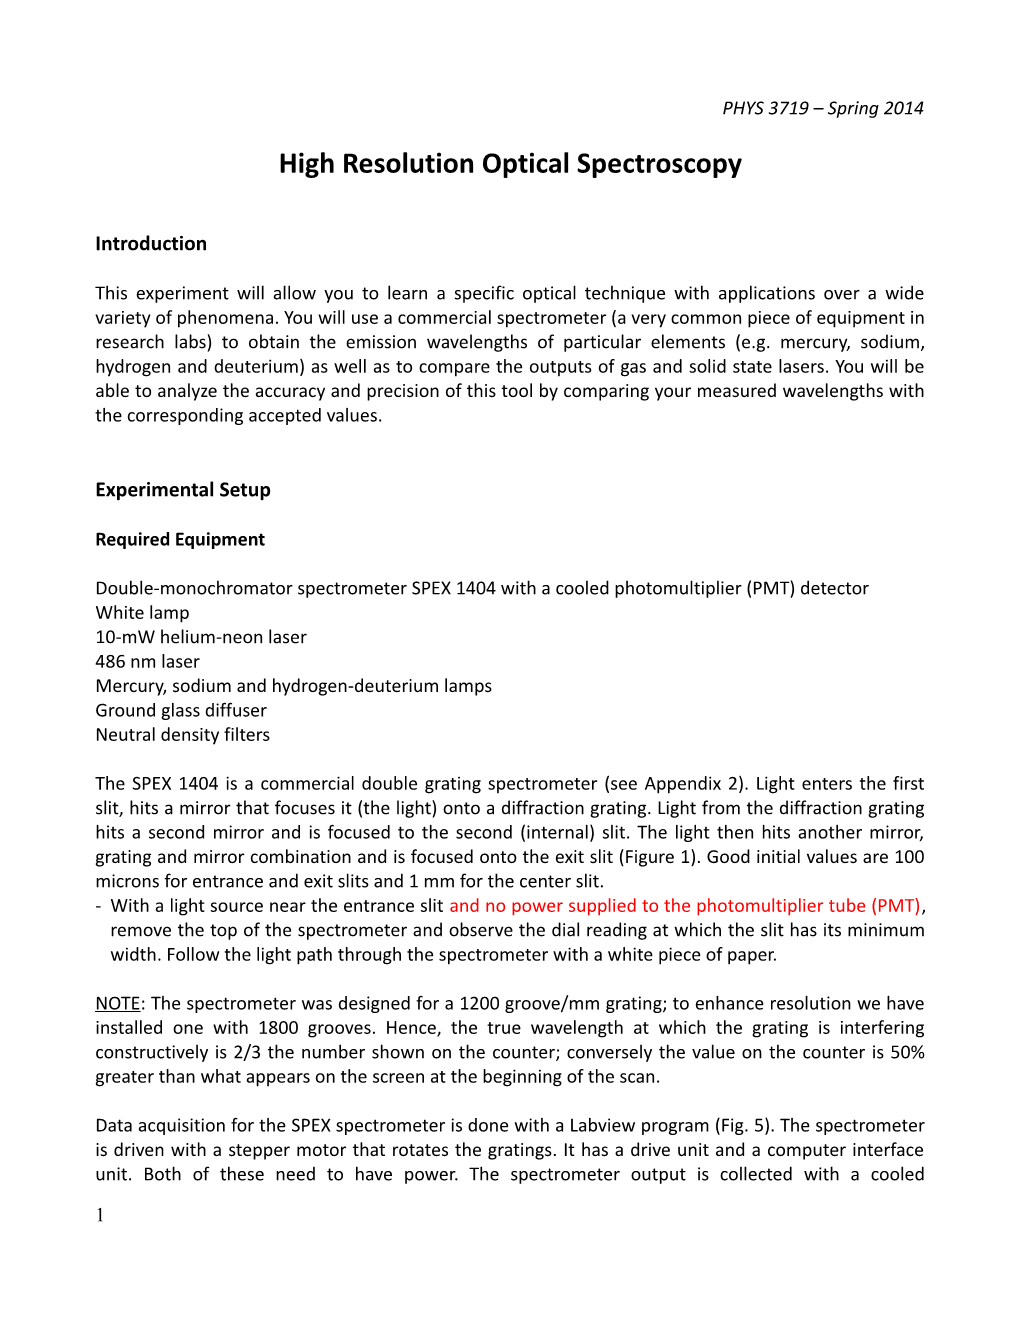 High Resolution Optical Spectroscopy